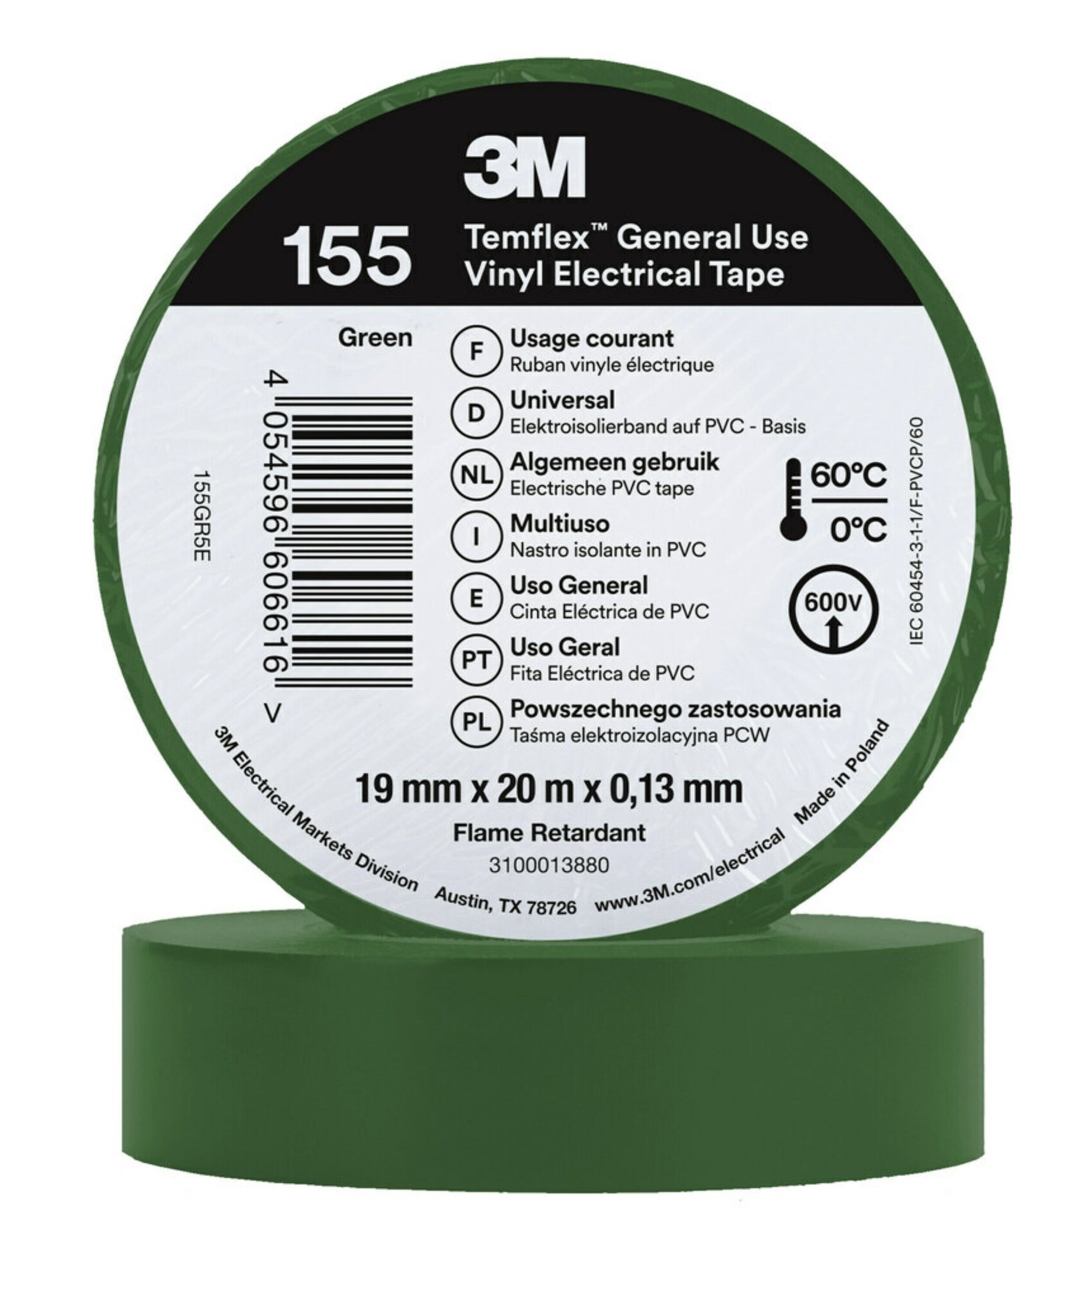 3M Temflex 155 vinyl electrical insulation tape, green, 19 mm x 20 m, 0.13 mm